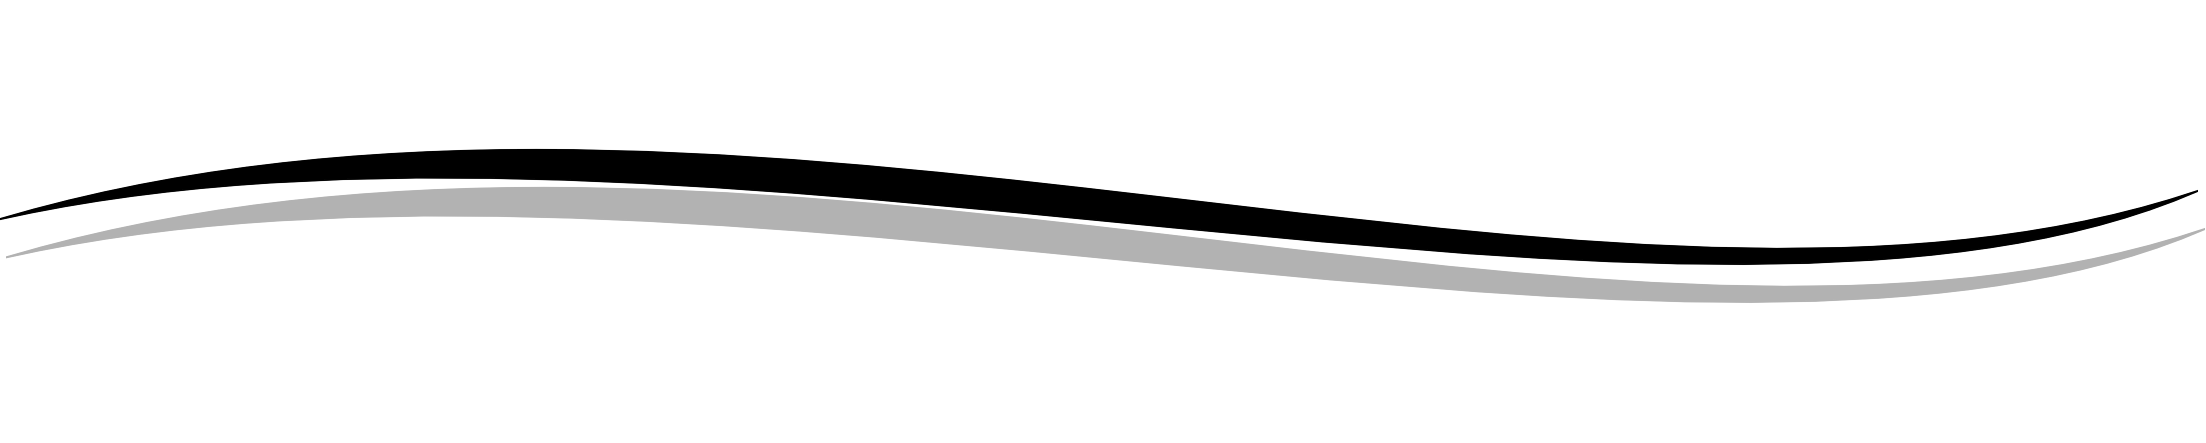 Line divider clipart